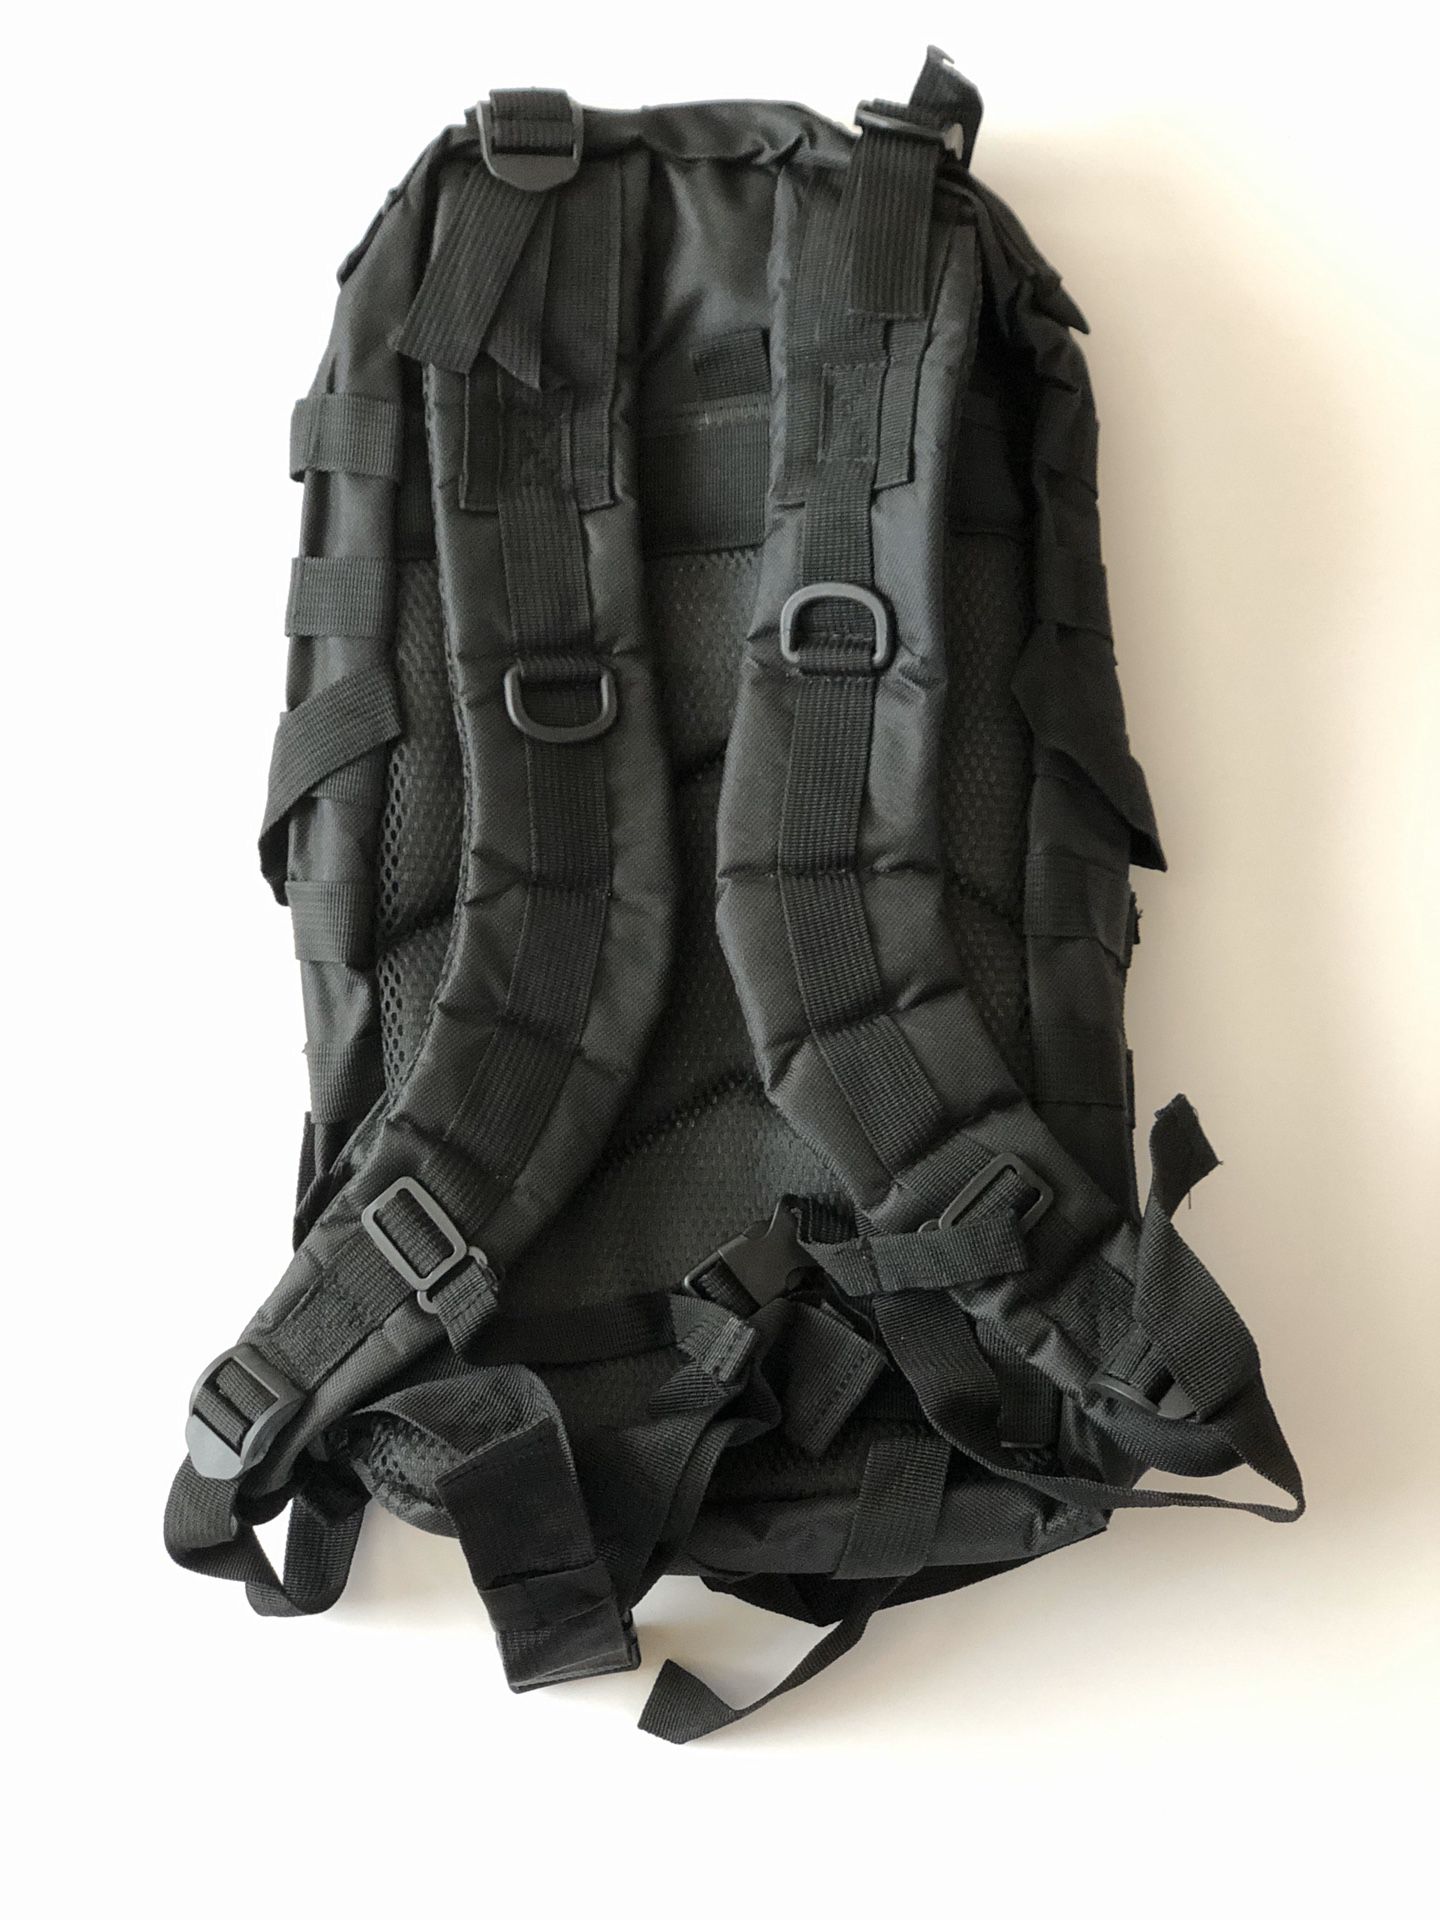 Black Tactical 35L Backpack - New